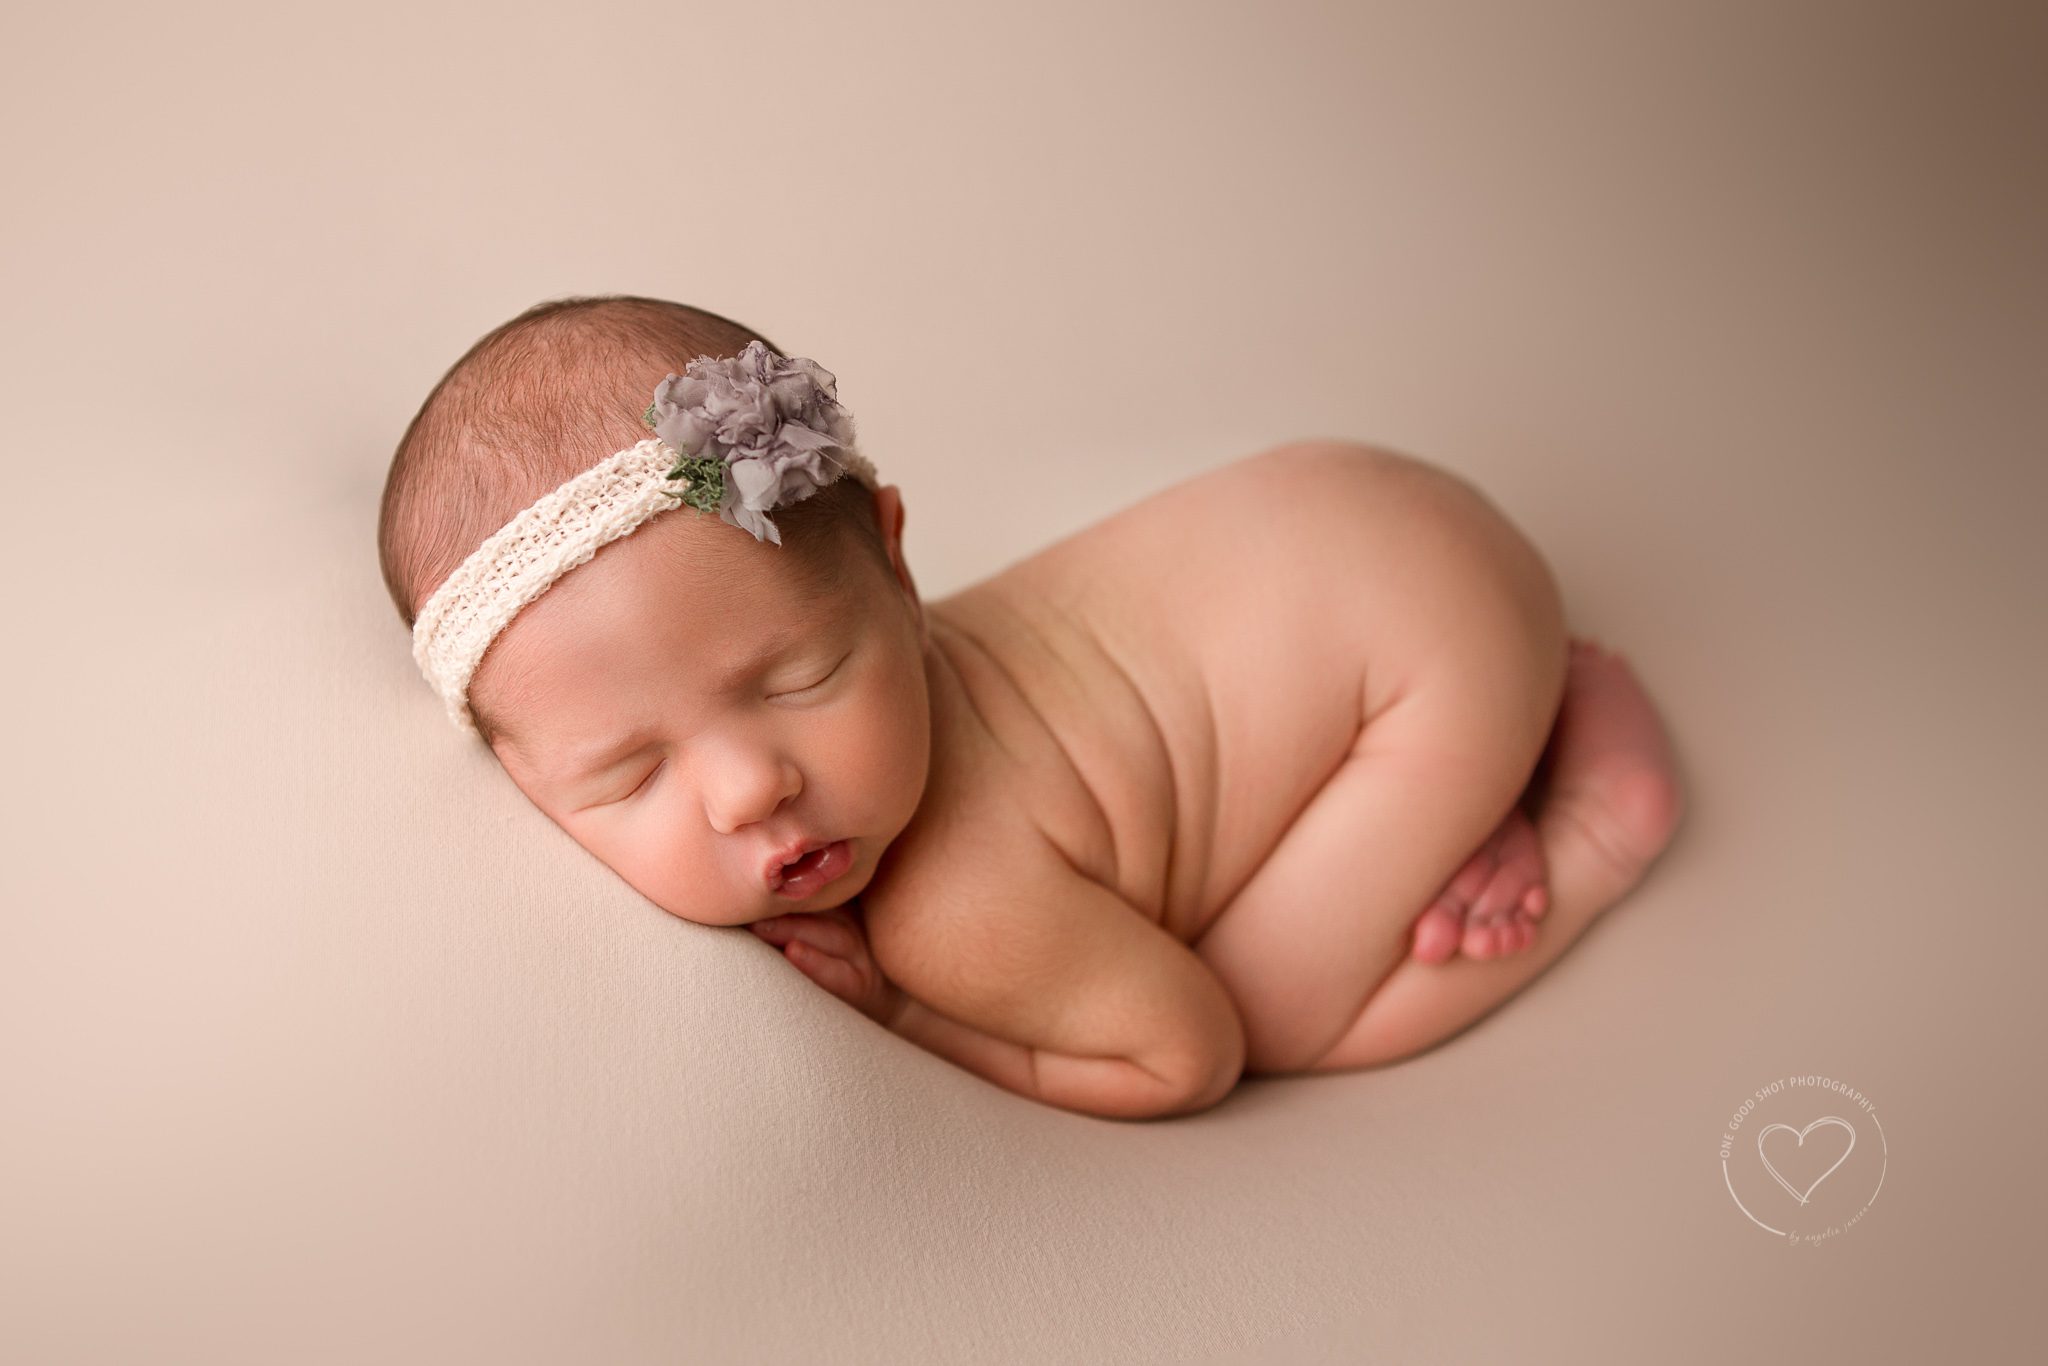 Fresno Newborn Photographer, Newborn Girl, Bum up, Tushy up, Neutral Backdrop, Floral headband, Sleeping, One Good Shot Photography